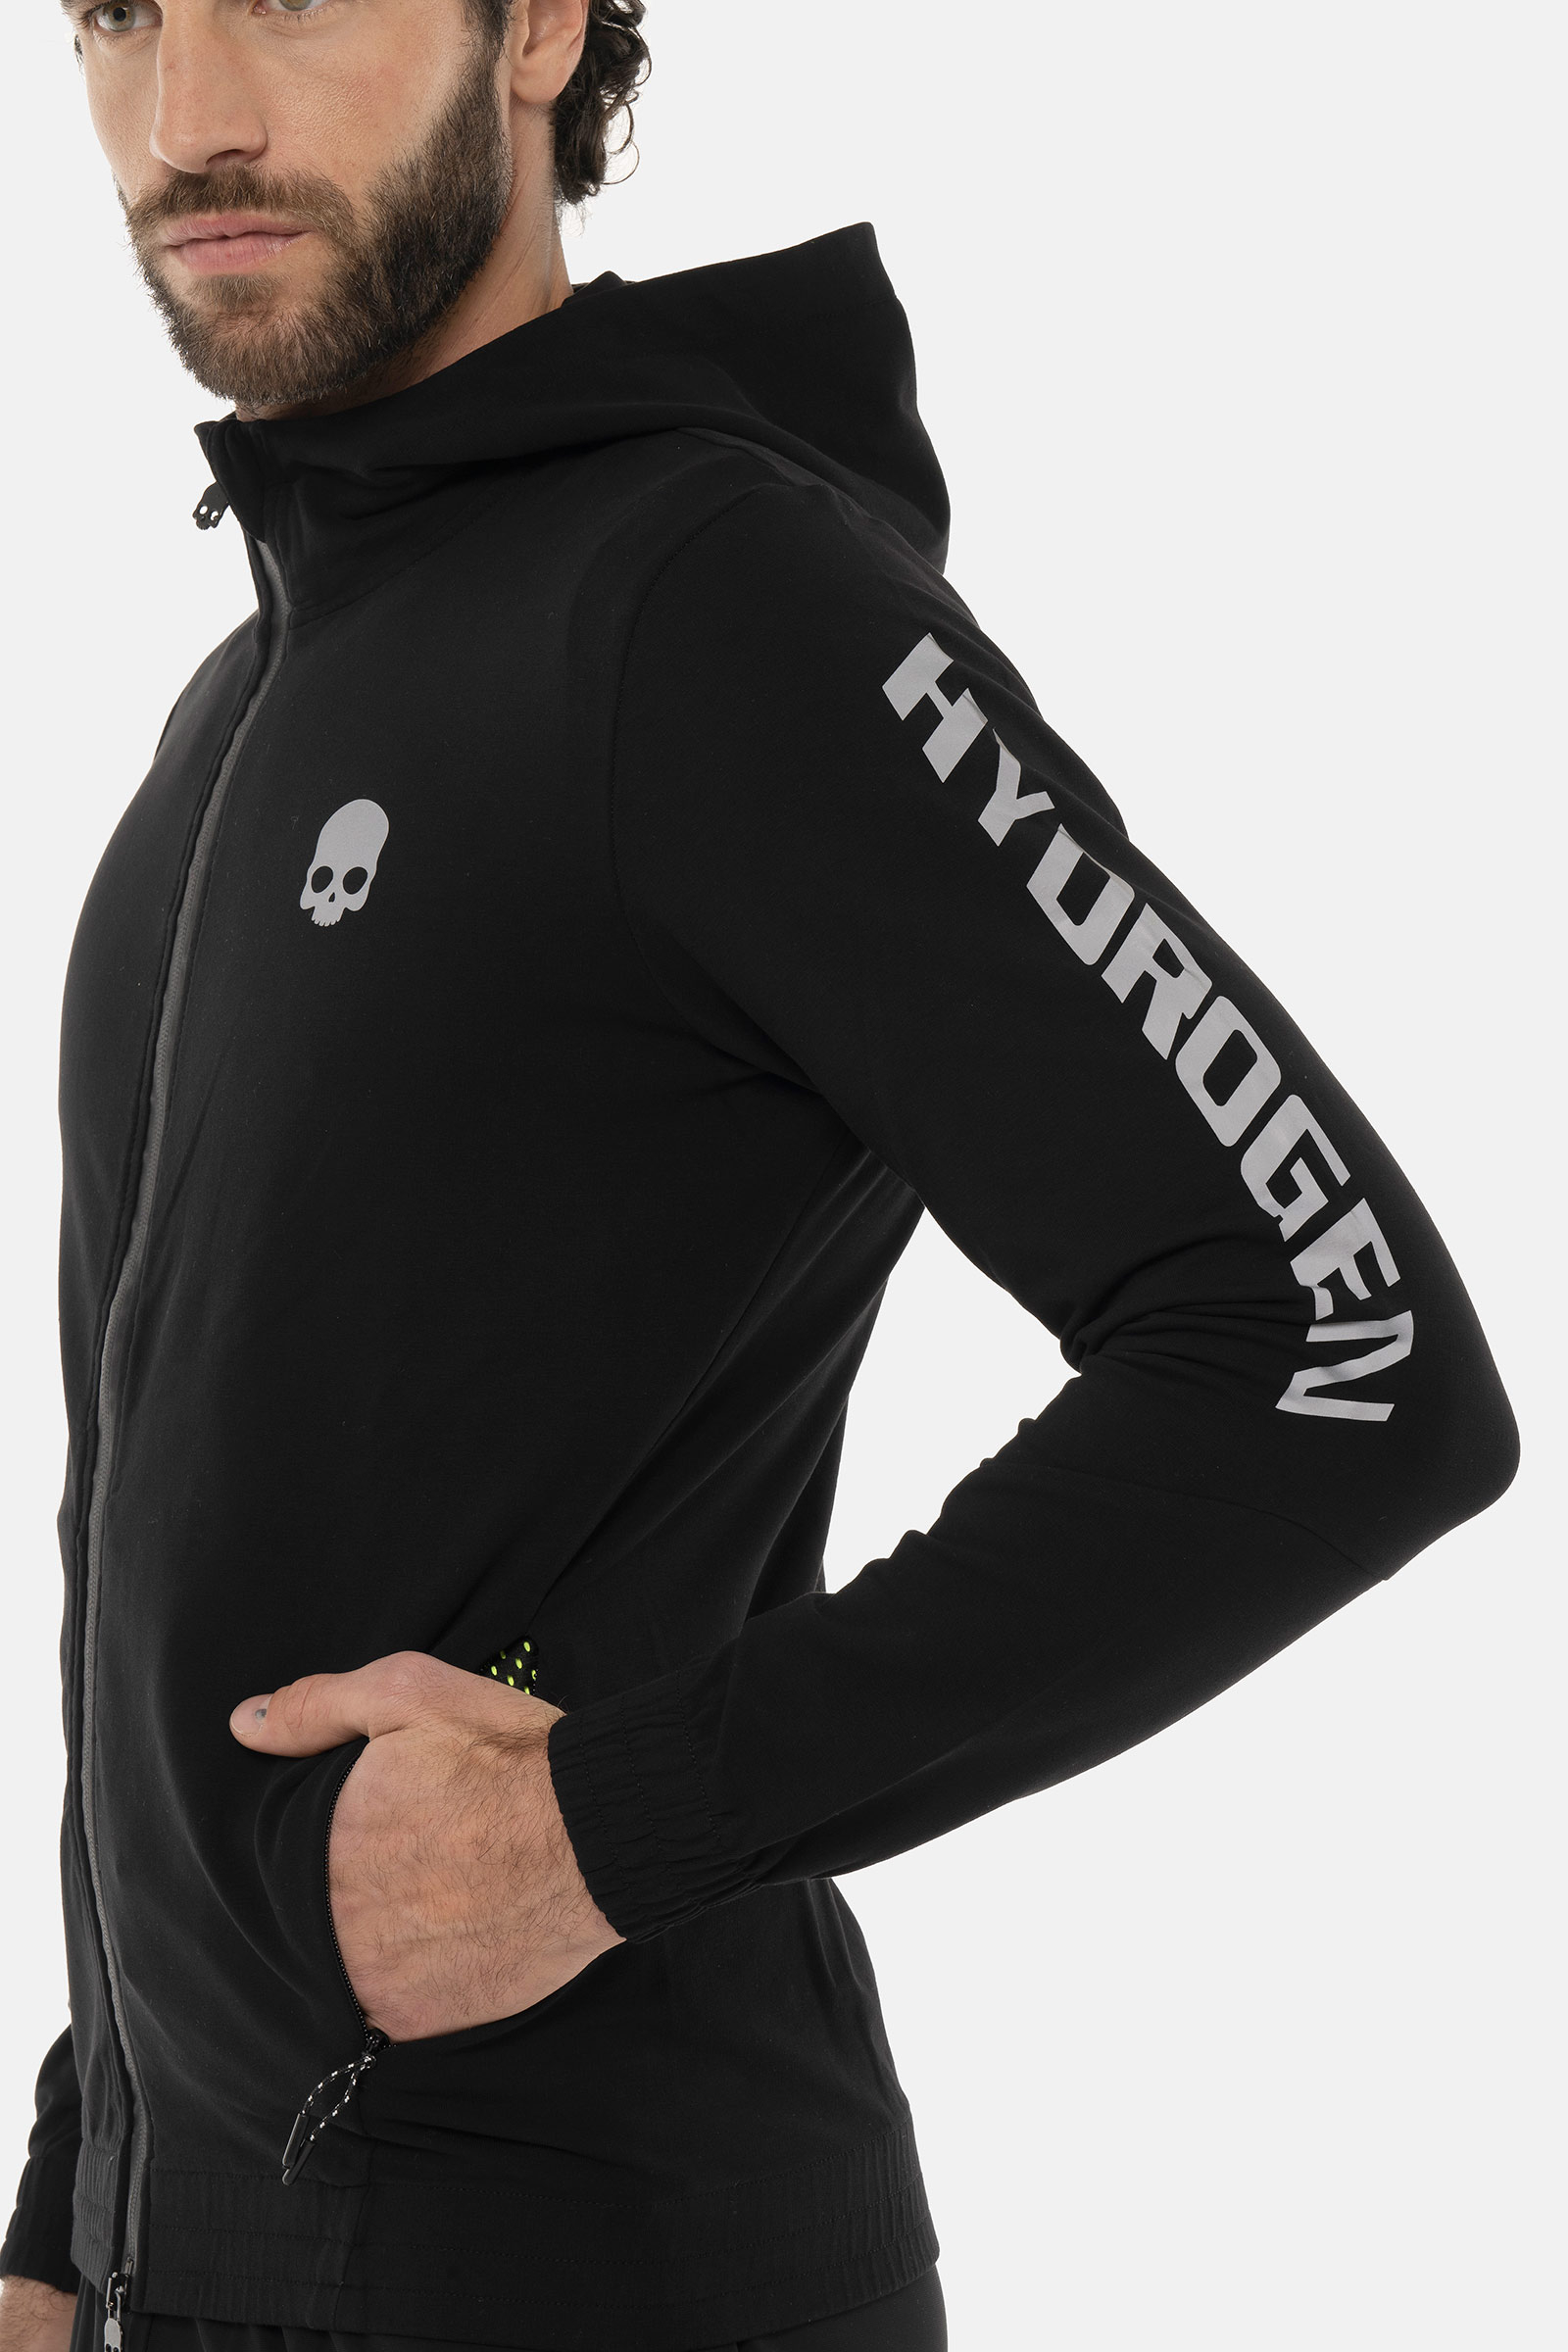 HYDROGEN FZ SWEATSHIRT - BLACK - Abbigliamento sportivo | Hydrogen